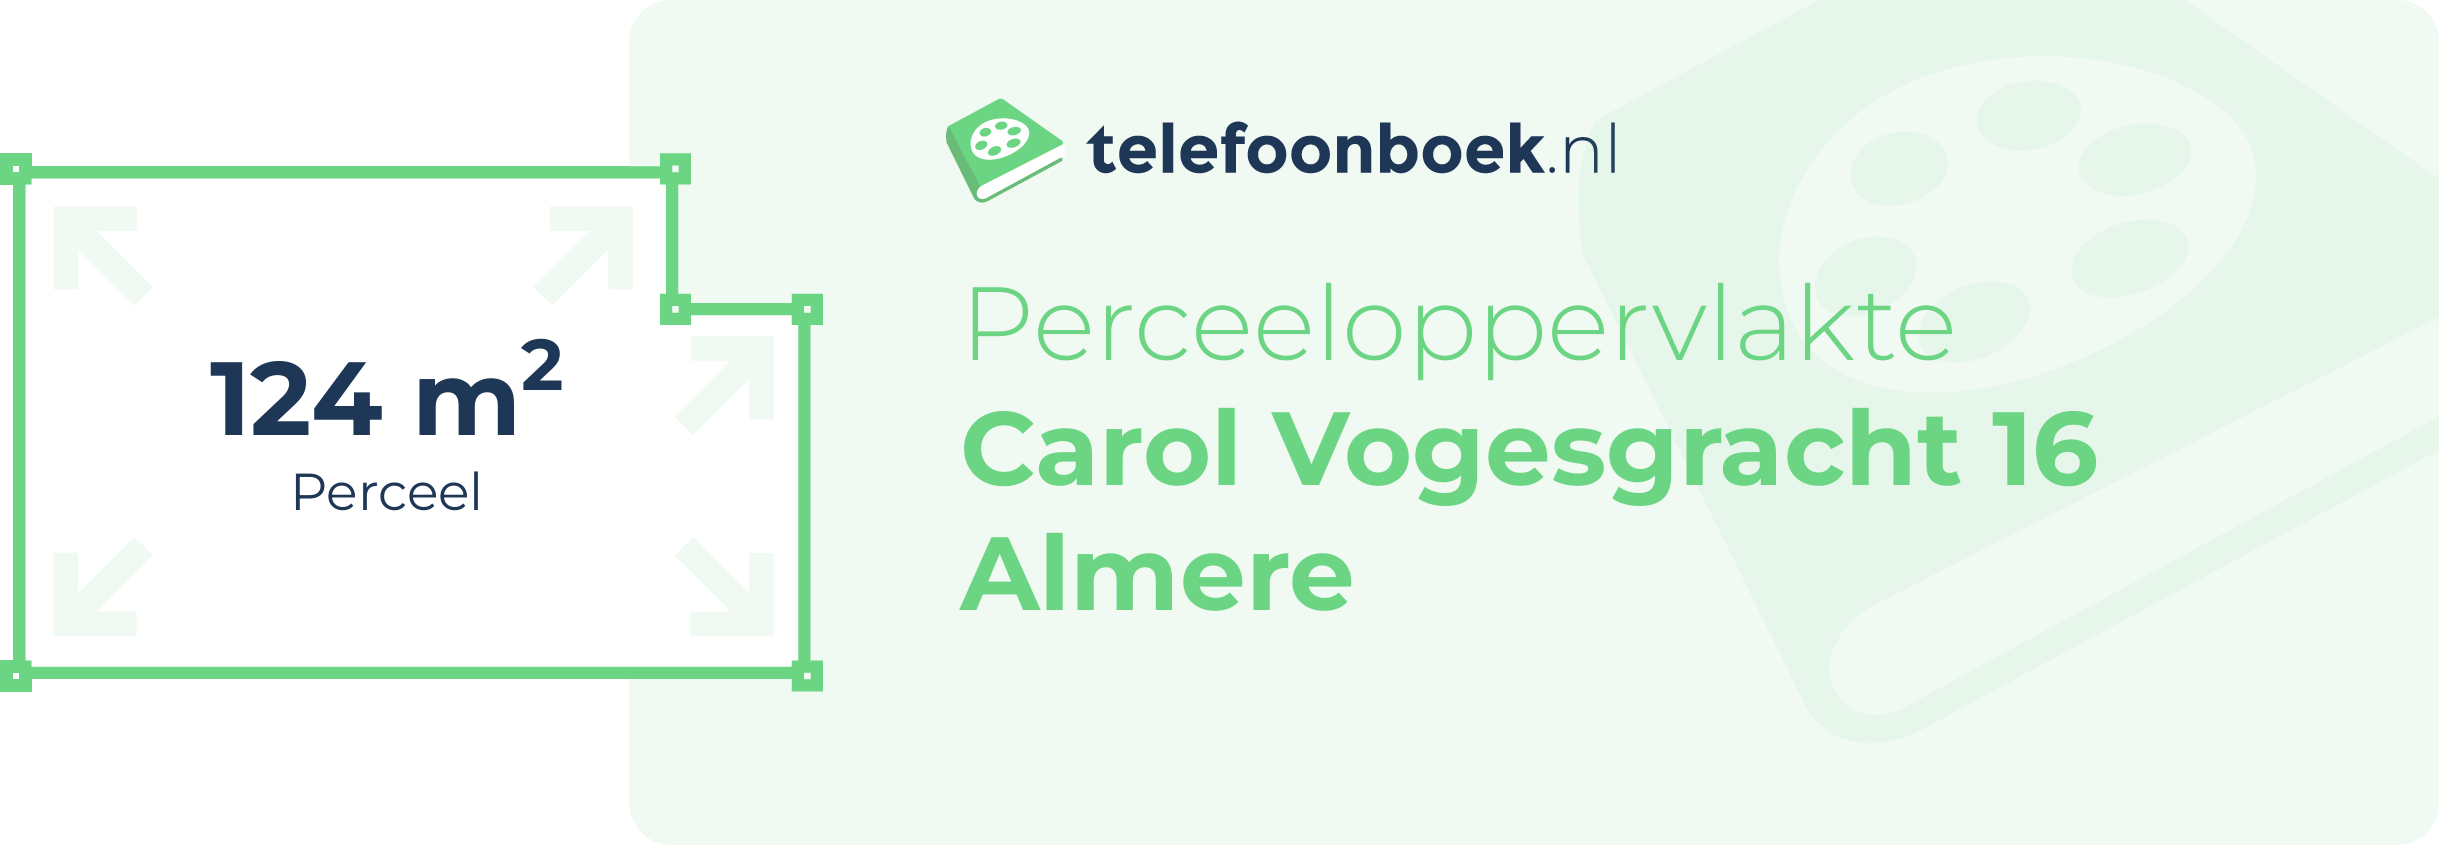 Perceeloppervlakte Carol Vogesgracht 16 Almere